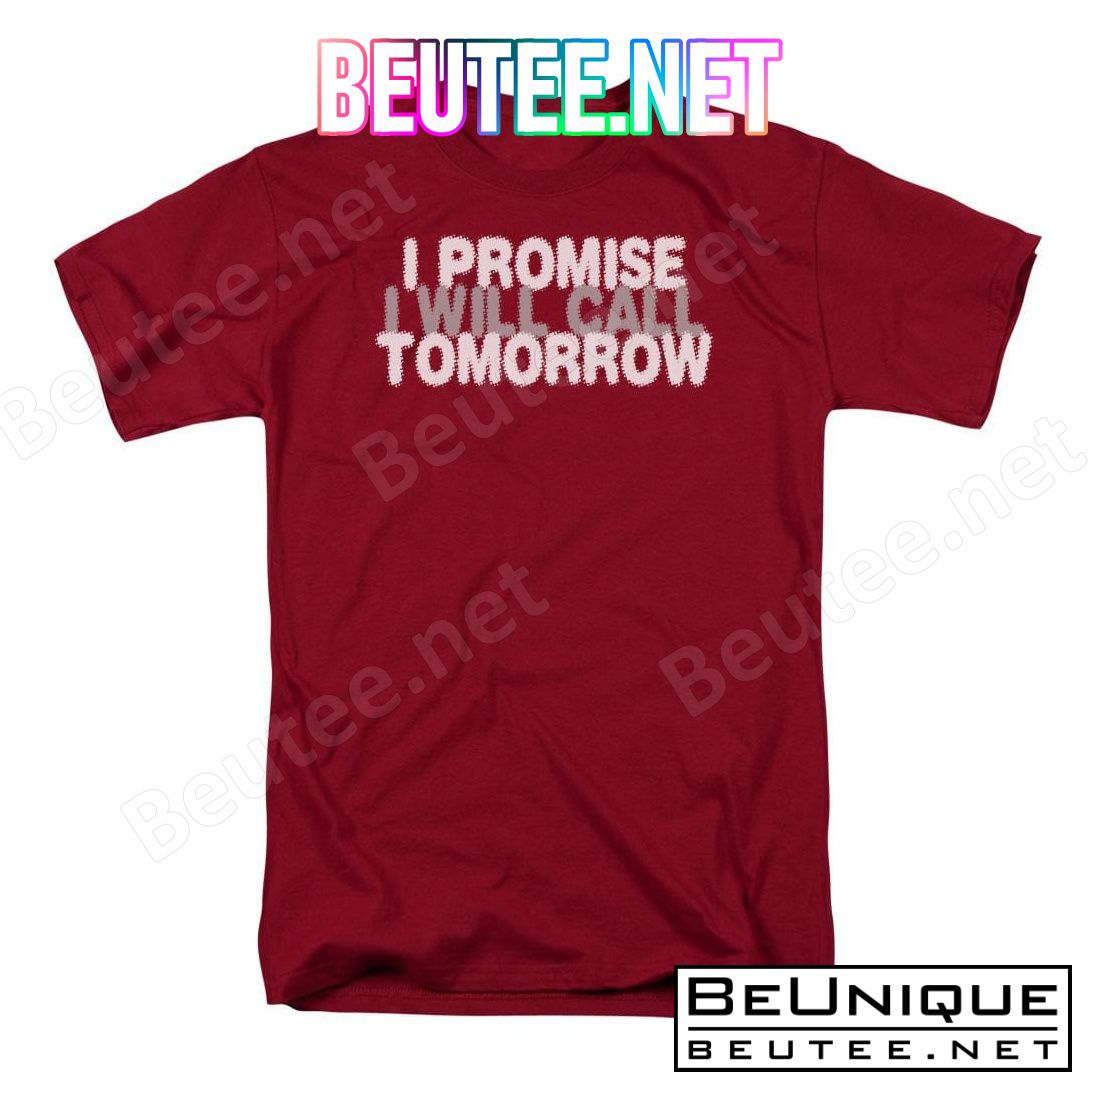 Will Call Tomorrow T-shirt